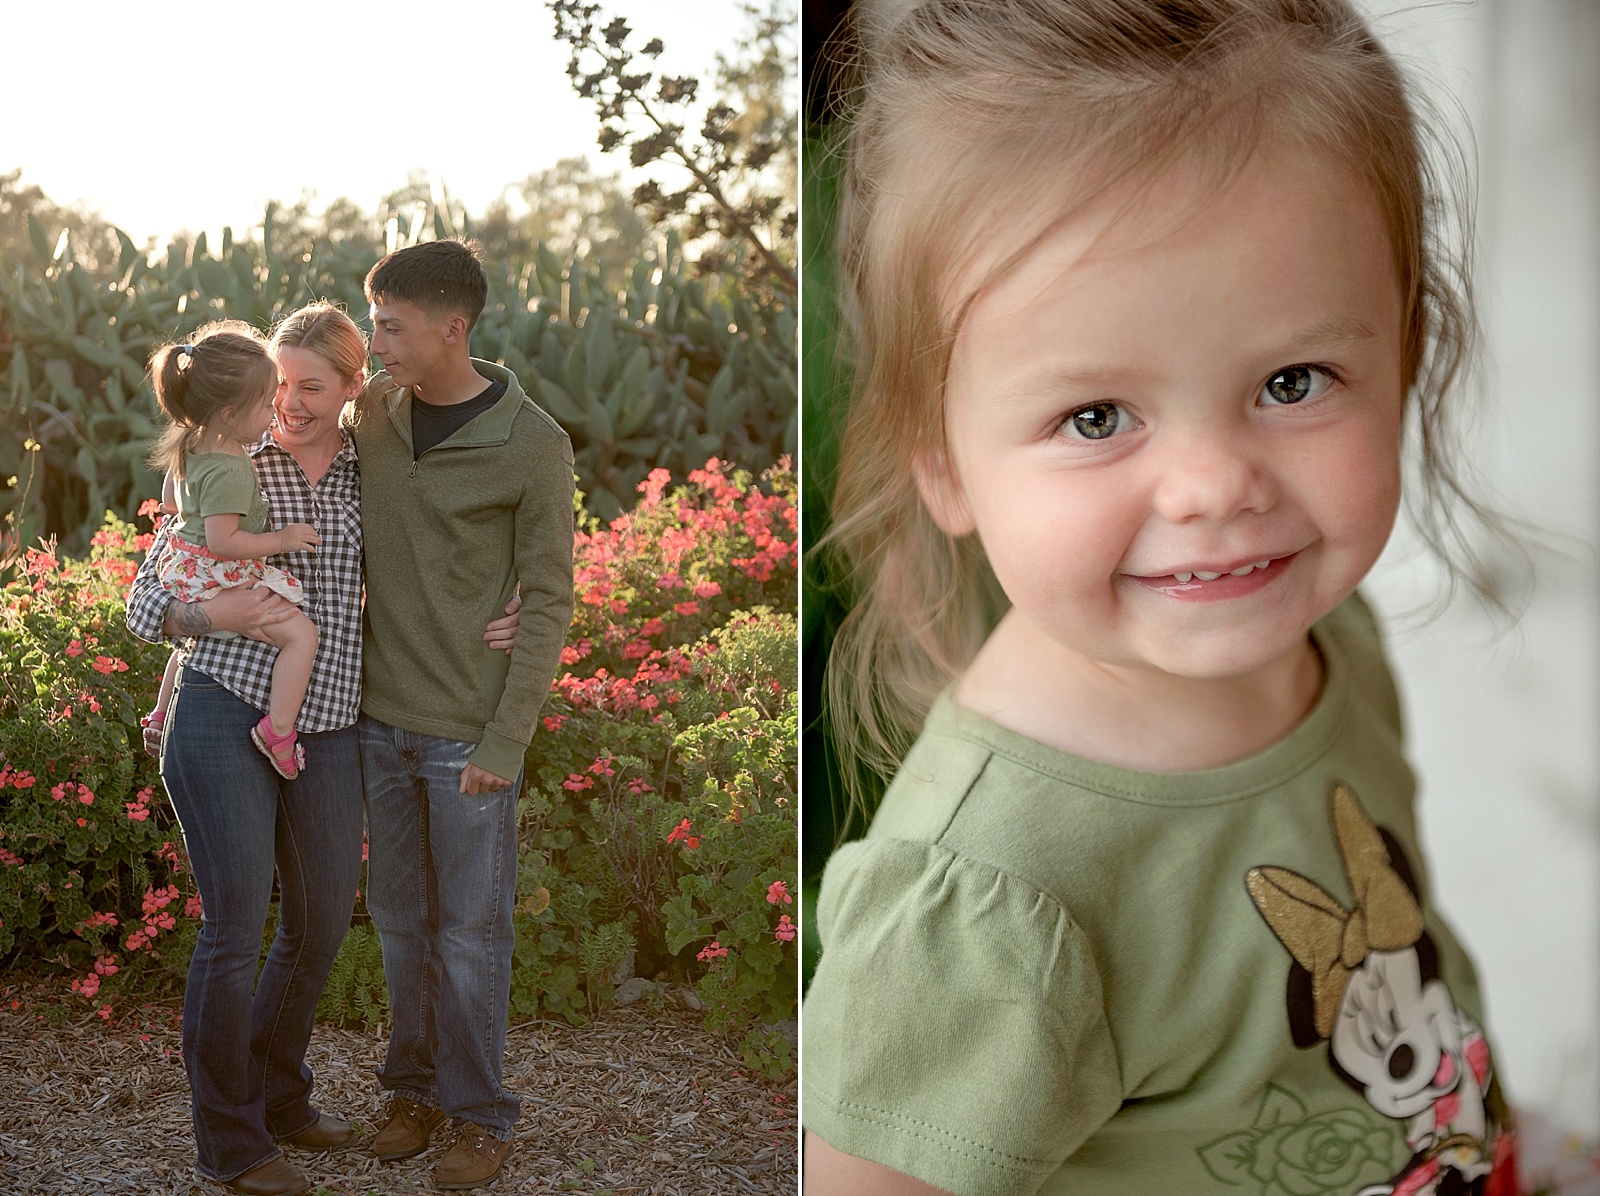 Rustic farm house family photo session from North Carolina family portrait photographer Lauren Nygard